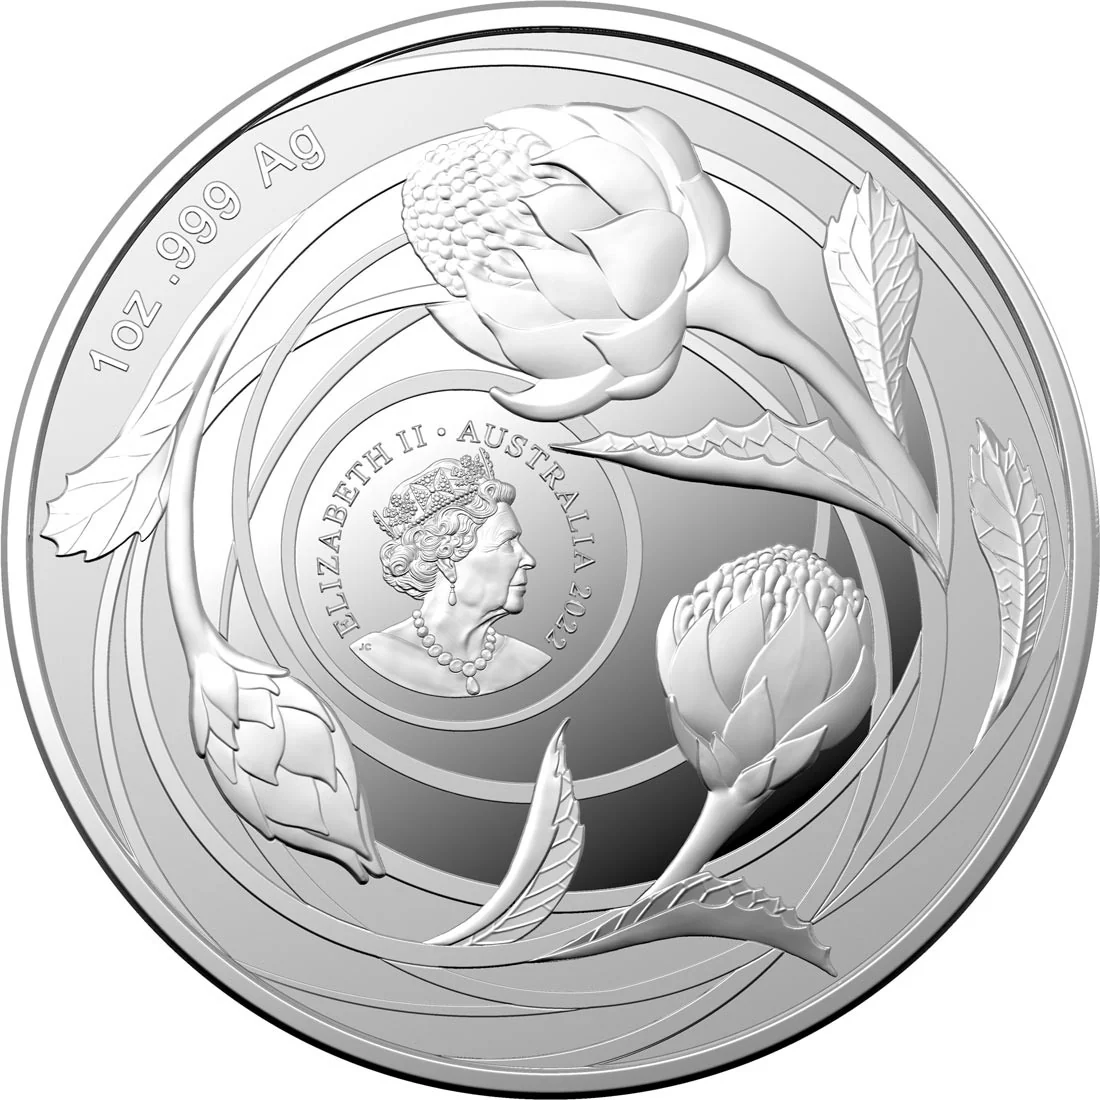 2022 $1 Wildflowers of Australia Waratah 1oz Silver BU Coin Obverse View